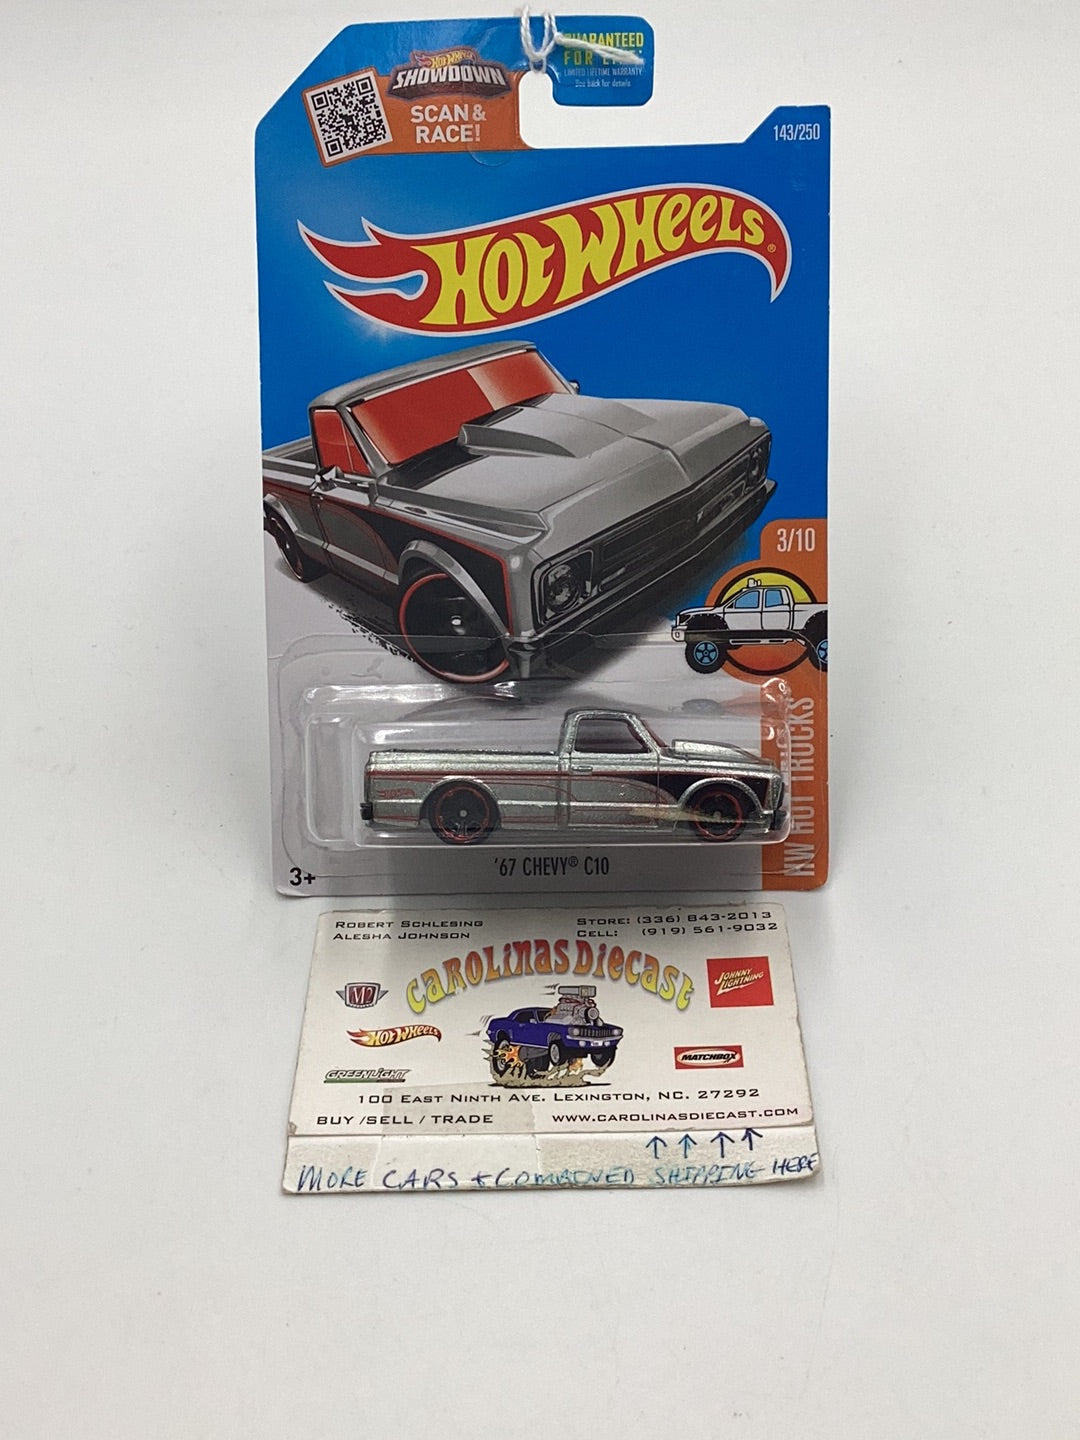 2016 Hot Wheels #143 ‘67 Chevy C10 Walmart Exclusive Zamac 148A